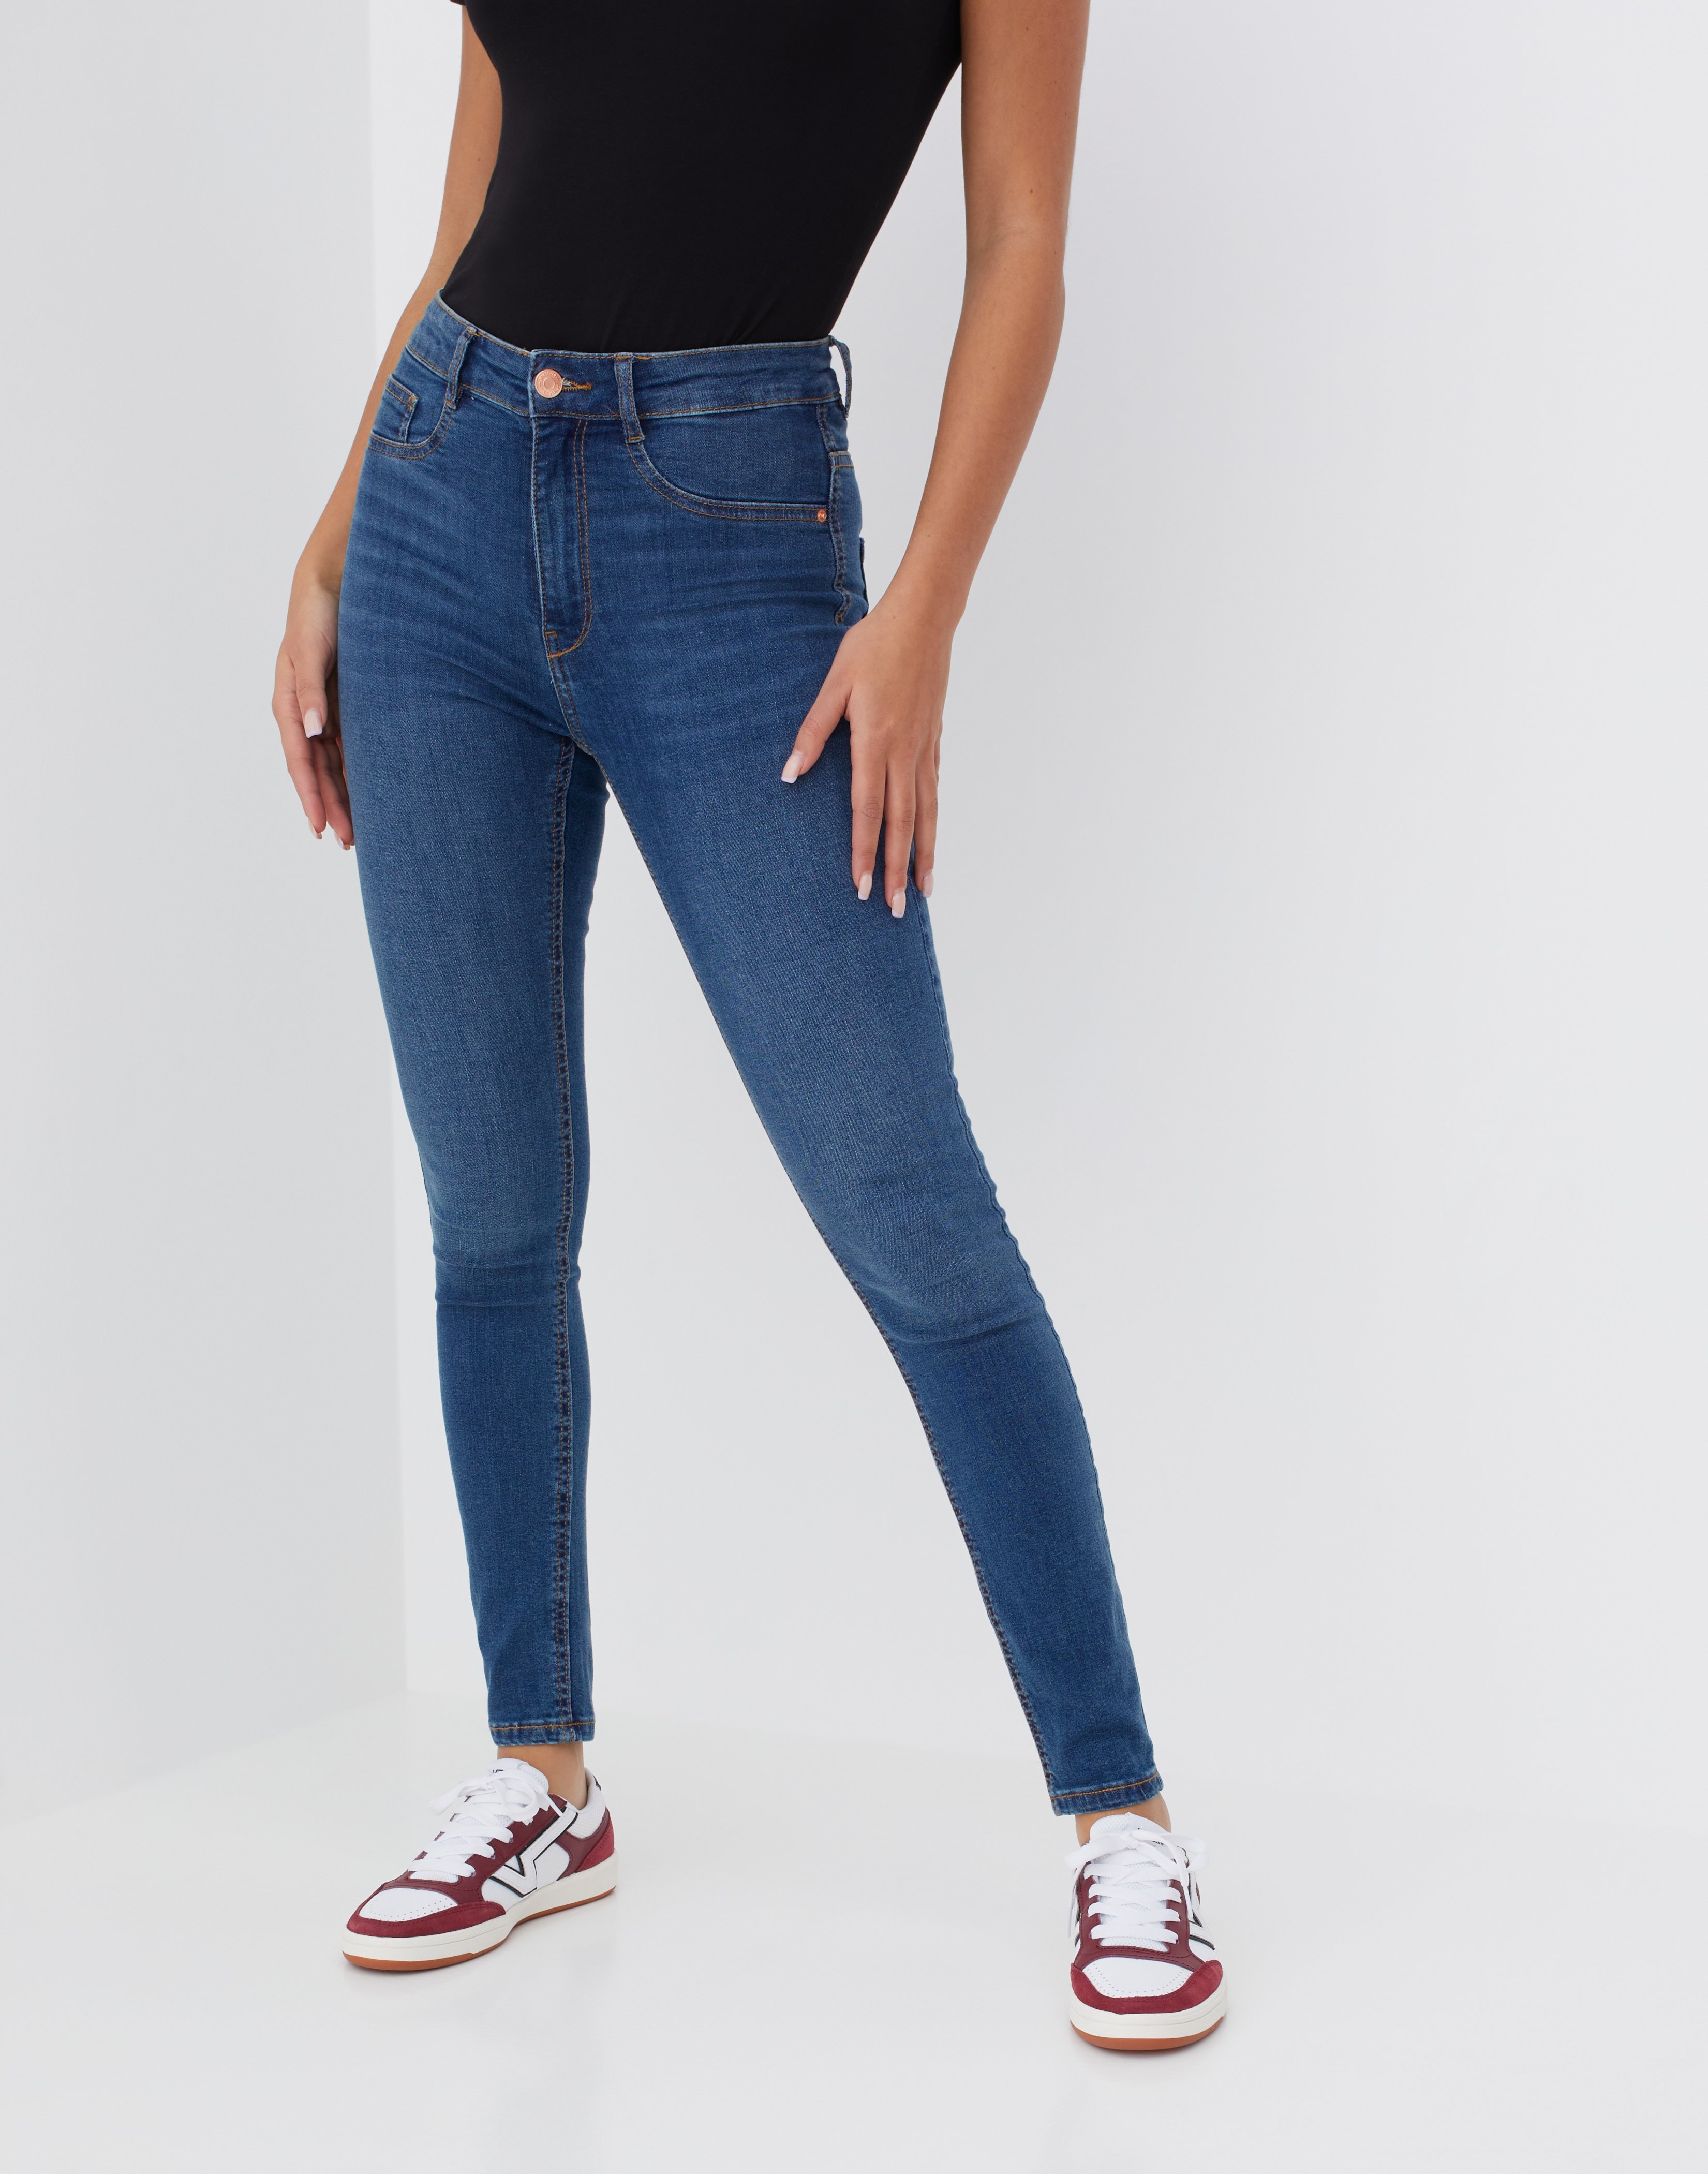 Shop Gina Tricot Molly High Waist Jeans 